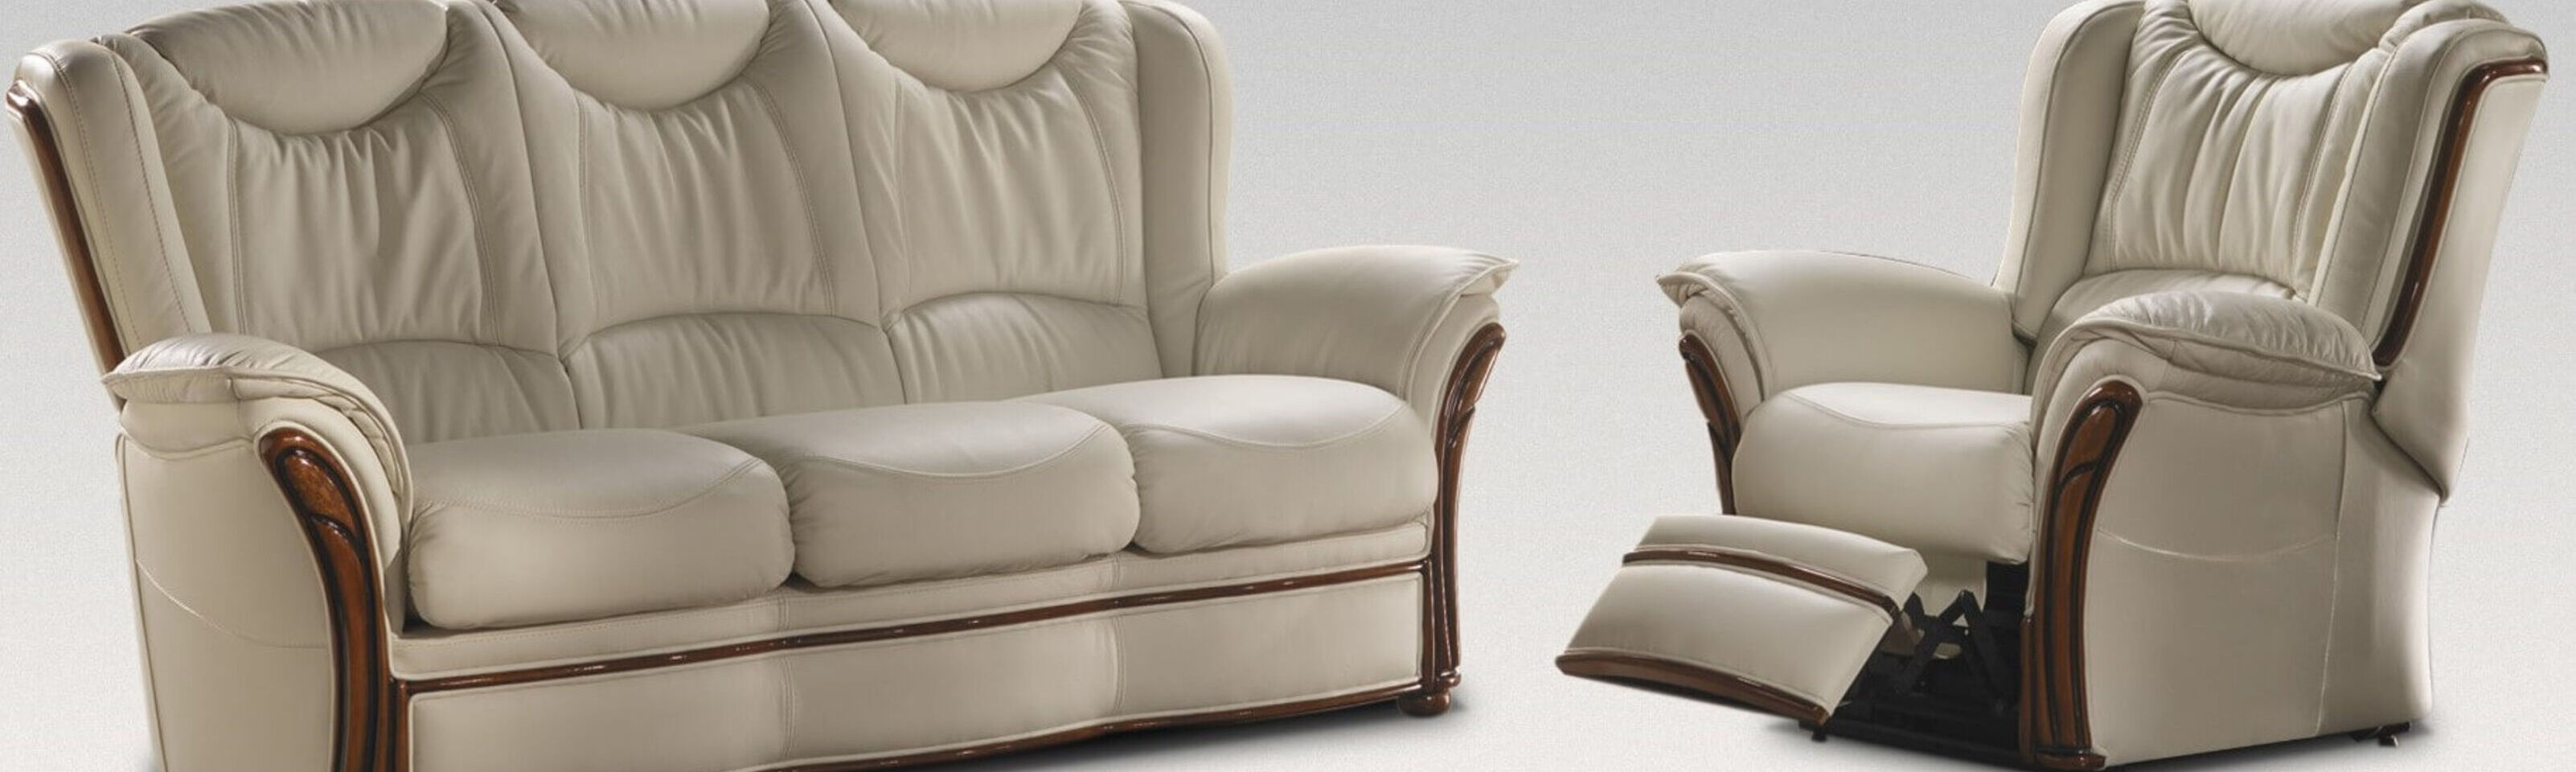 Verona 3+1 Electric Reclining Genuine Italian Cream Leather Sofa Suite Offer